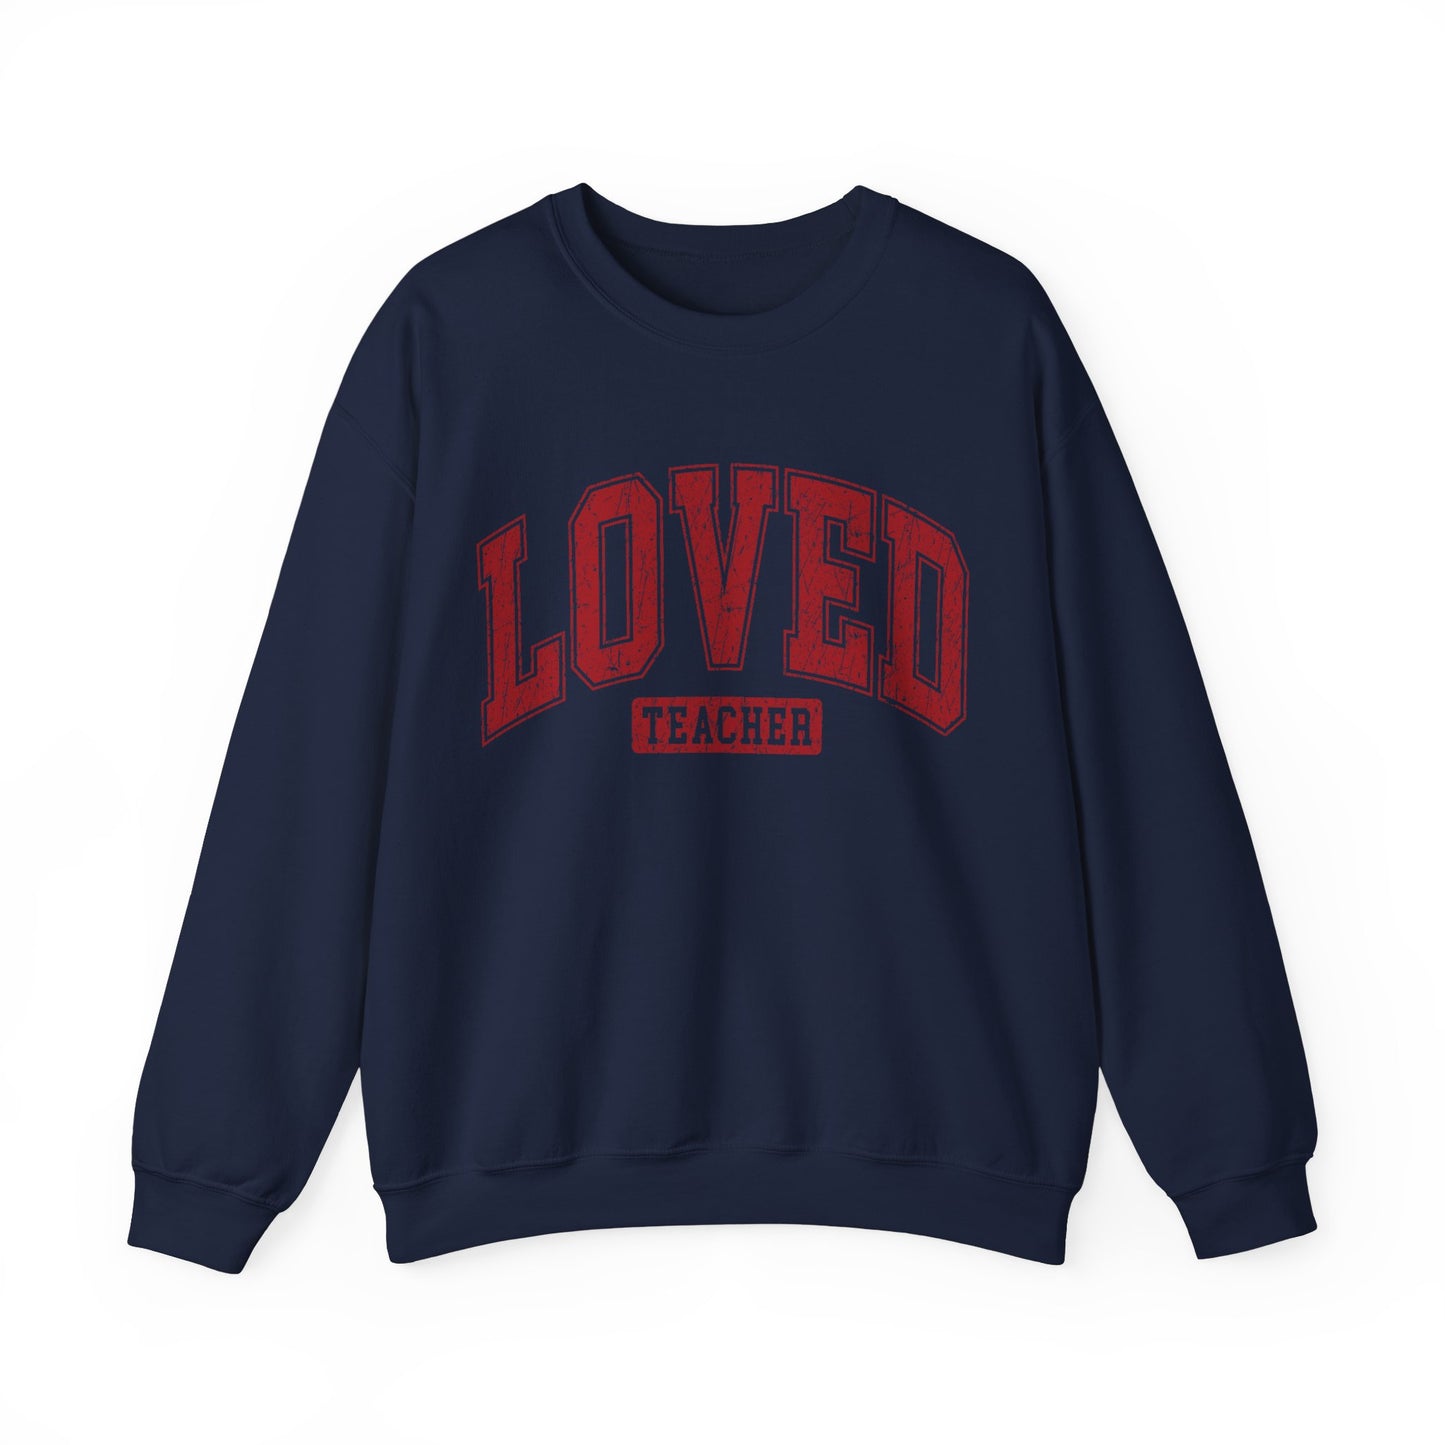 LOVED Teacher Women's Sweatshirt